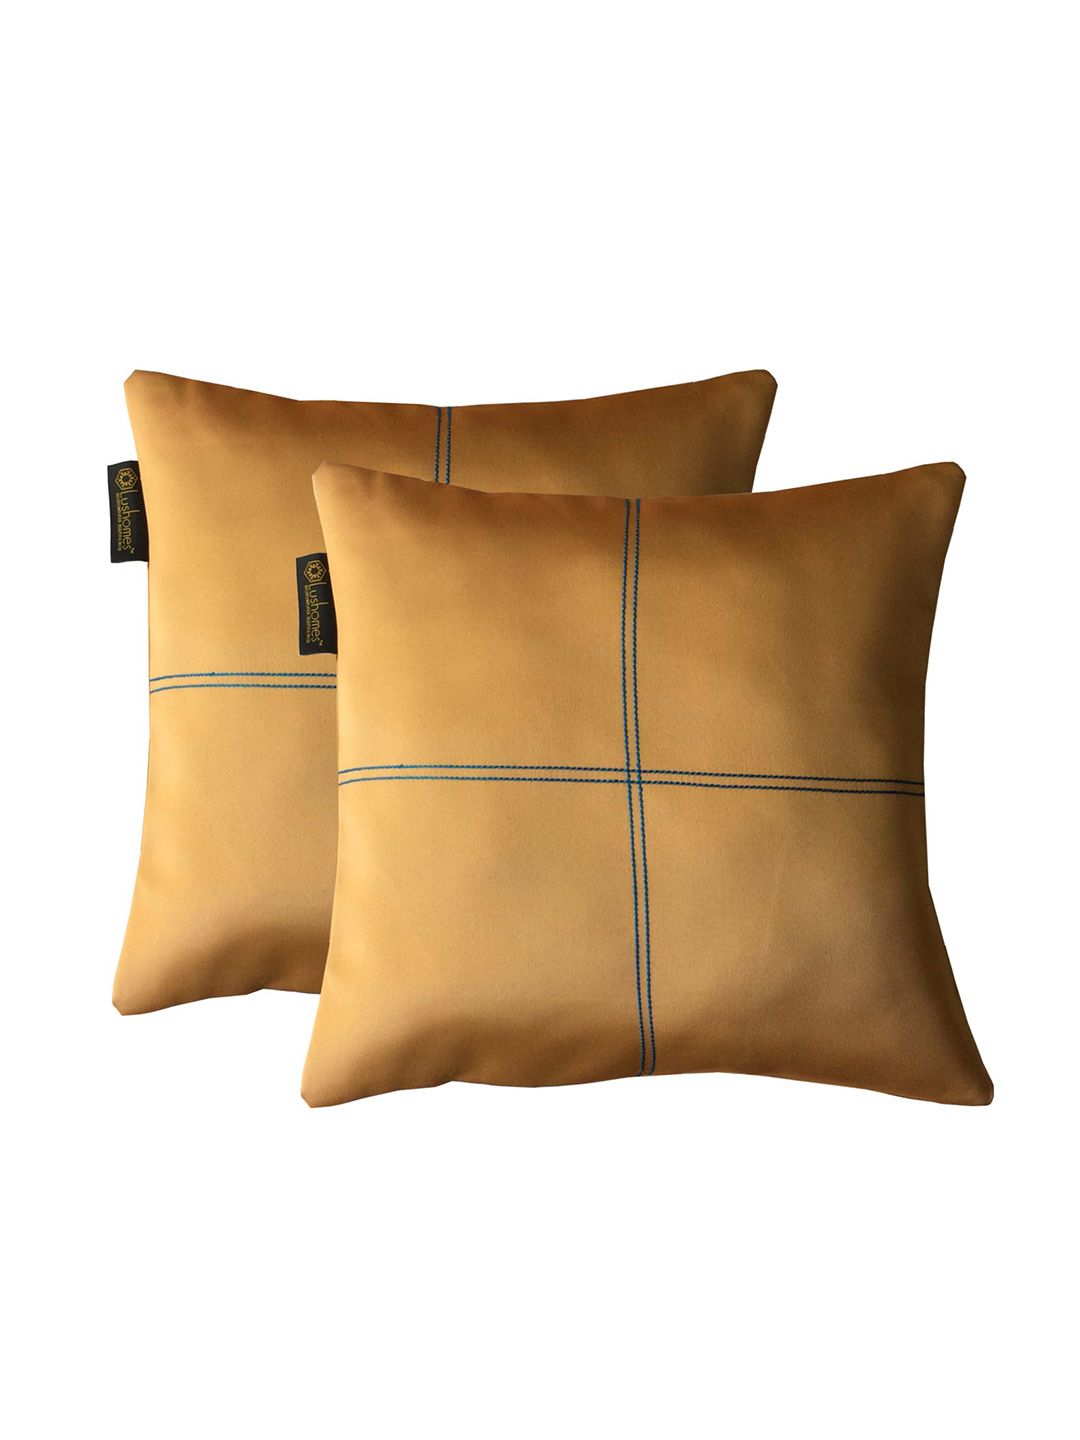 Lushomes Orange Set Of 2 Geometric Square Cushion Covers Price in India